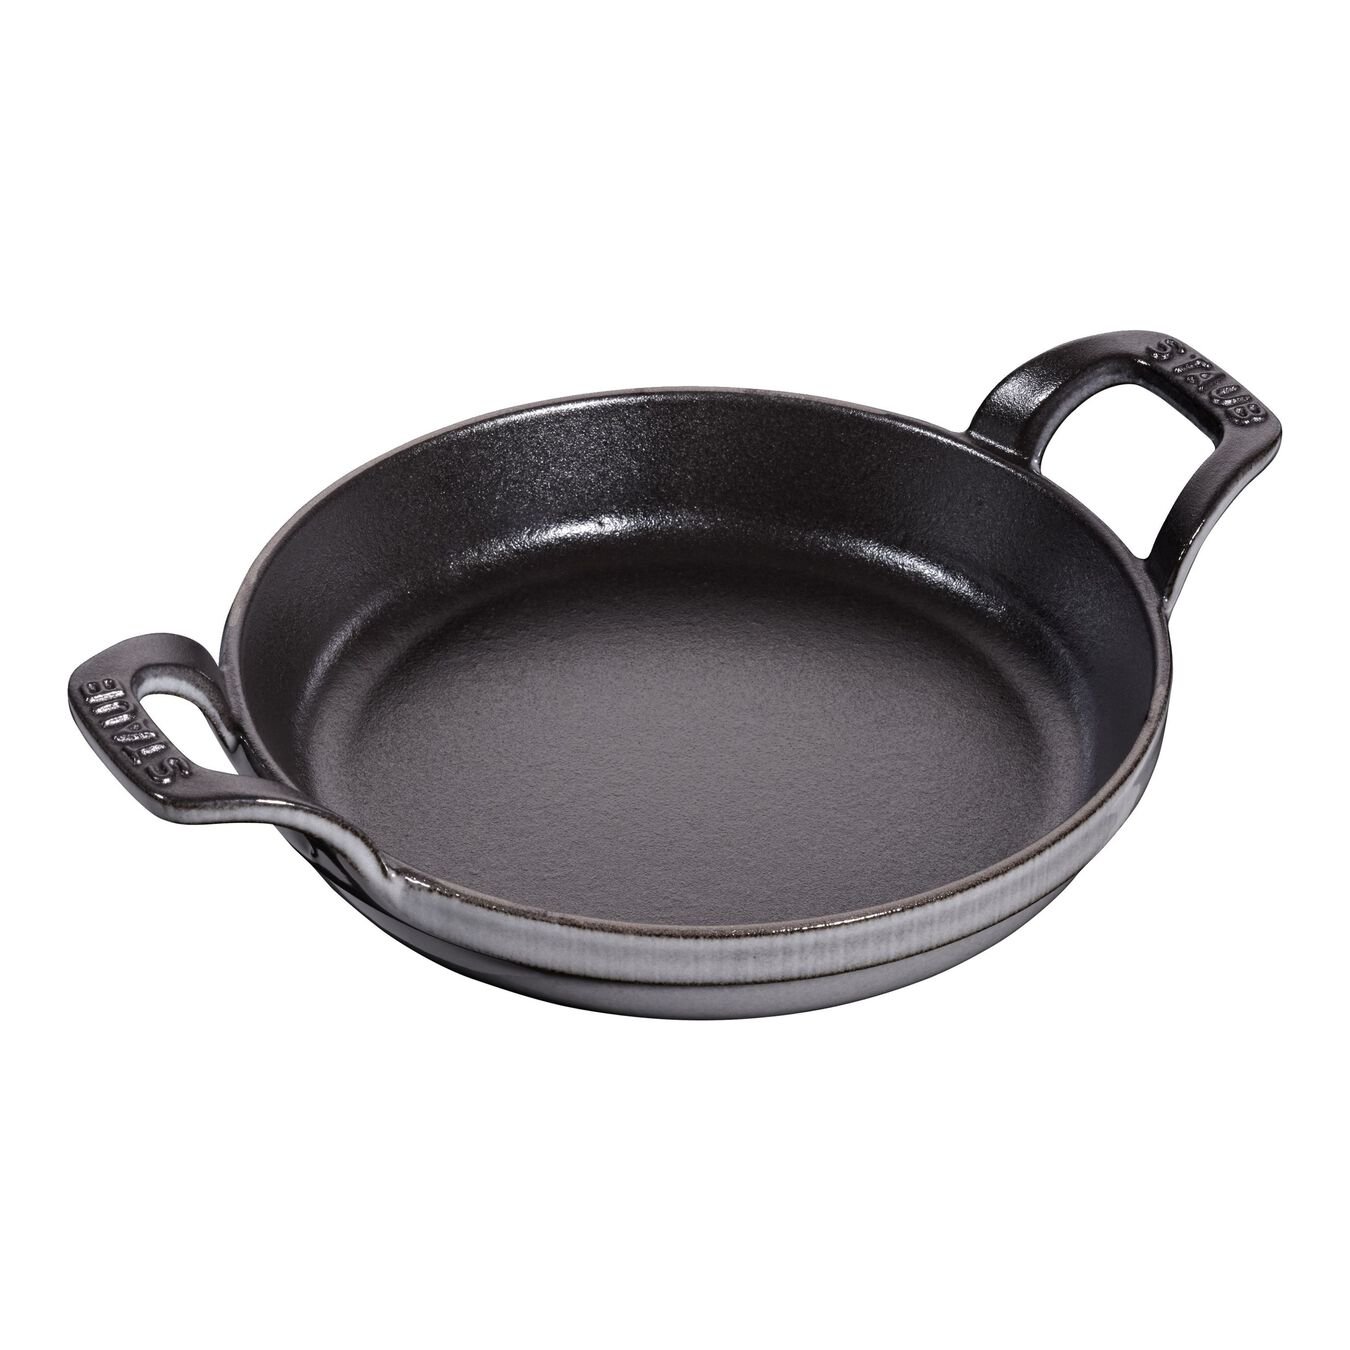 16 cm round Cast iron Oven dish graphite-grey,,large 1